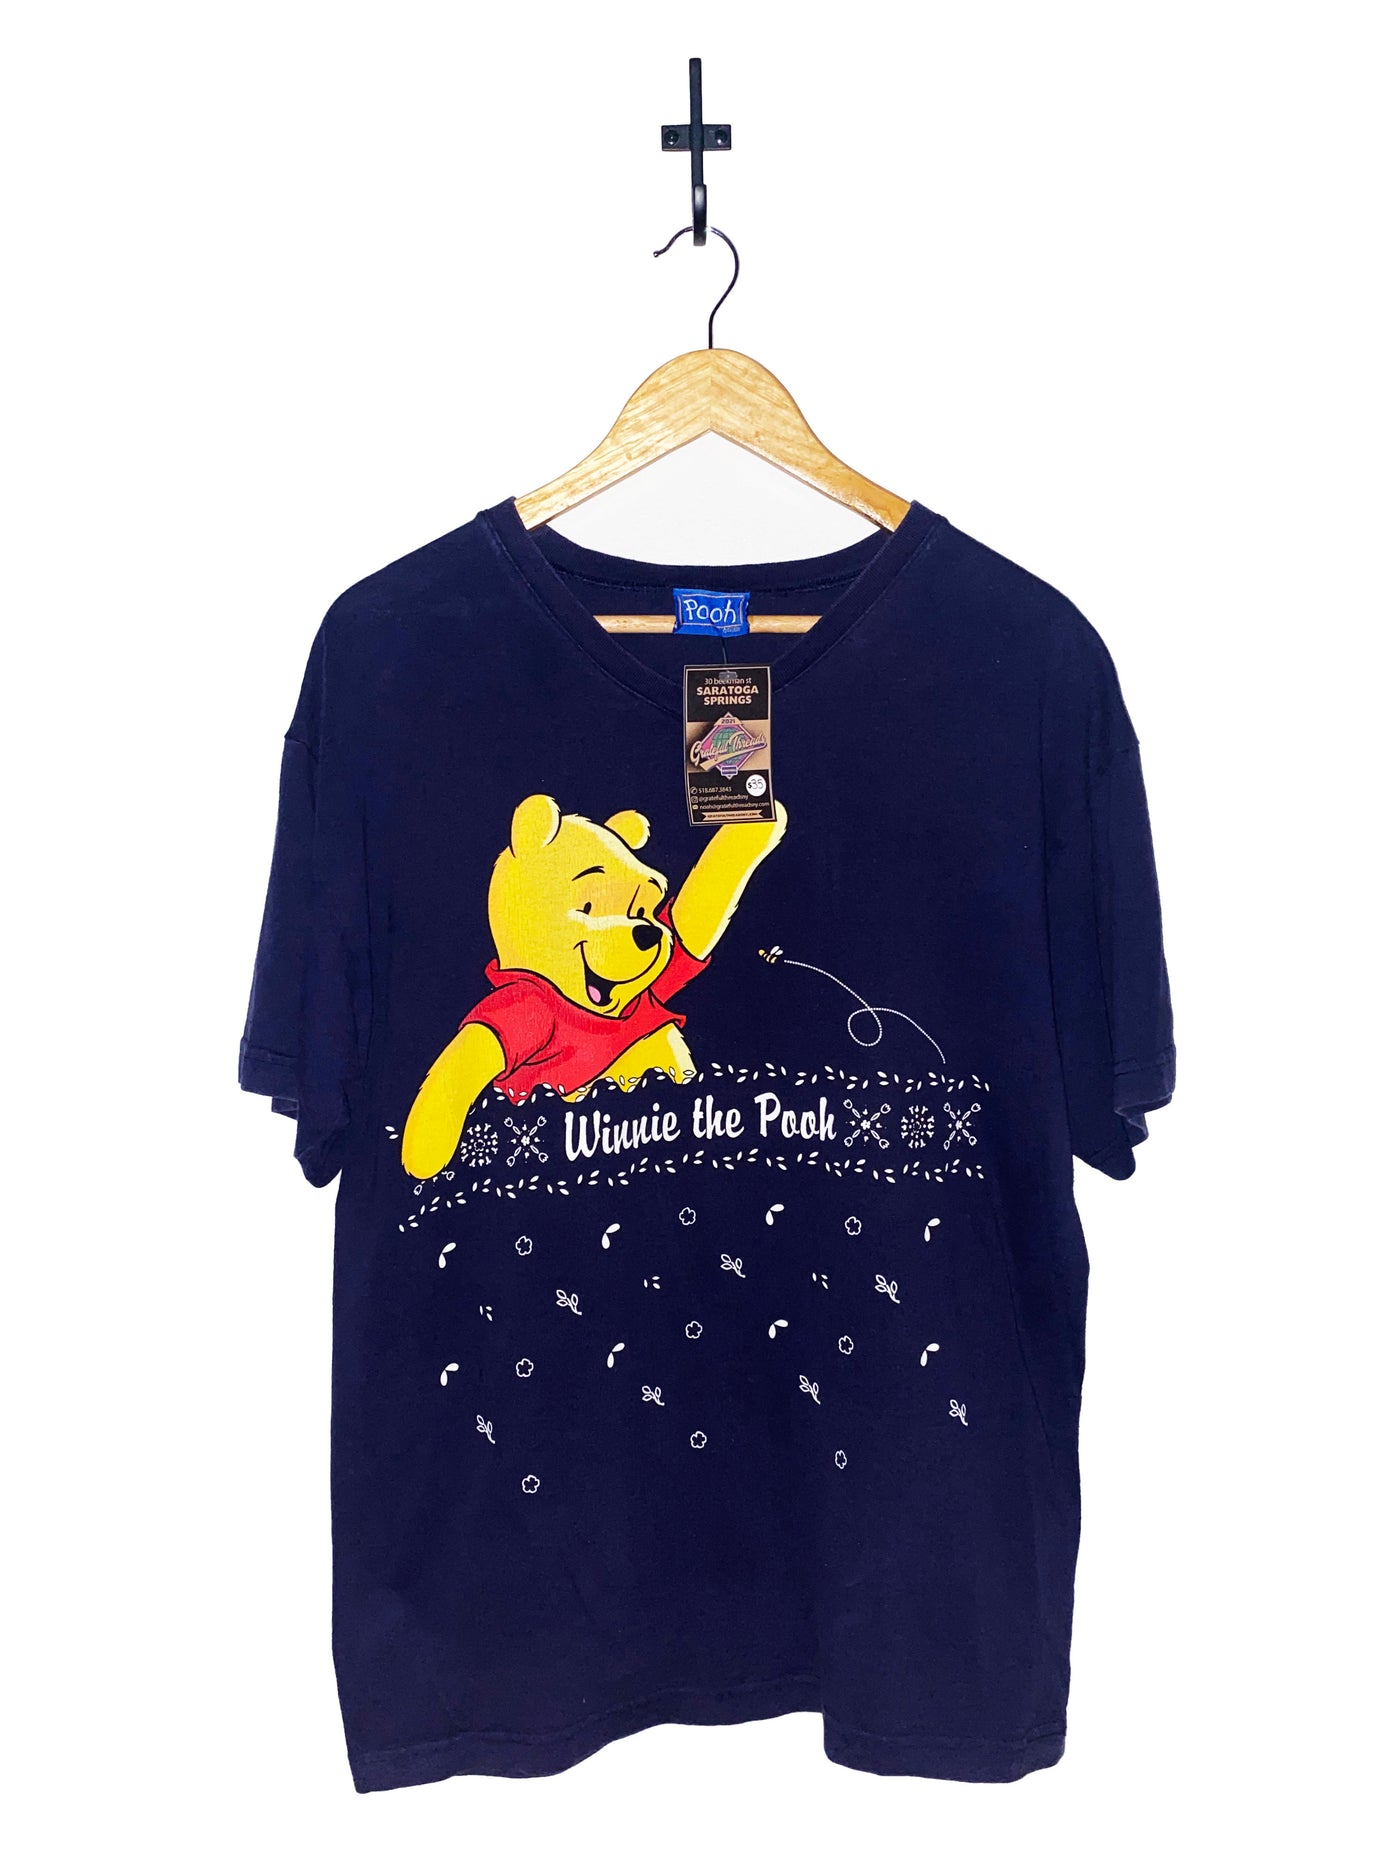 Vintage Winnie the Pooh Disney T-Shirt